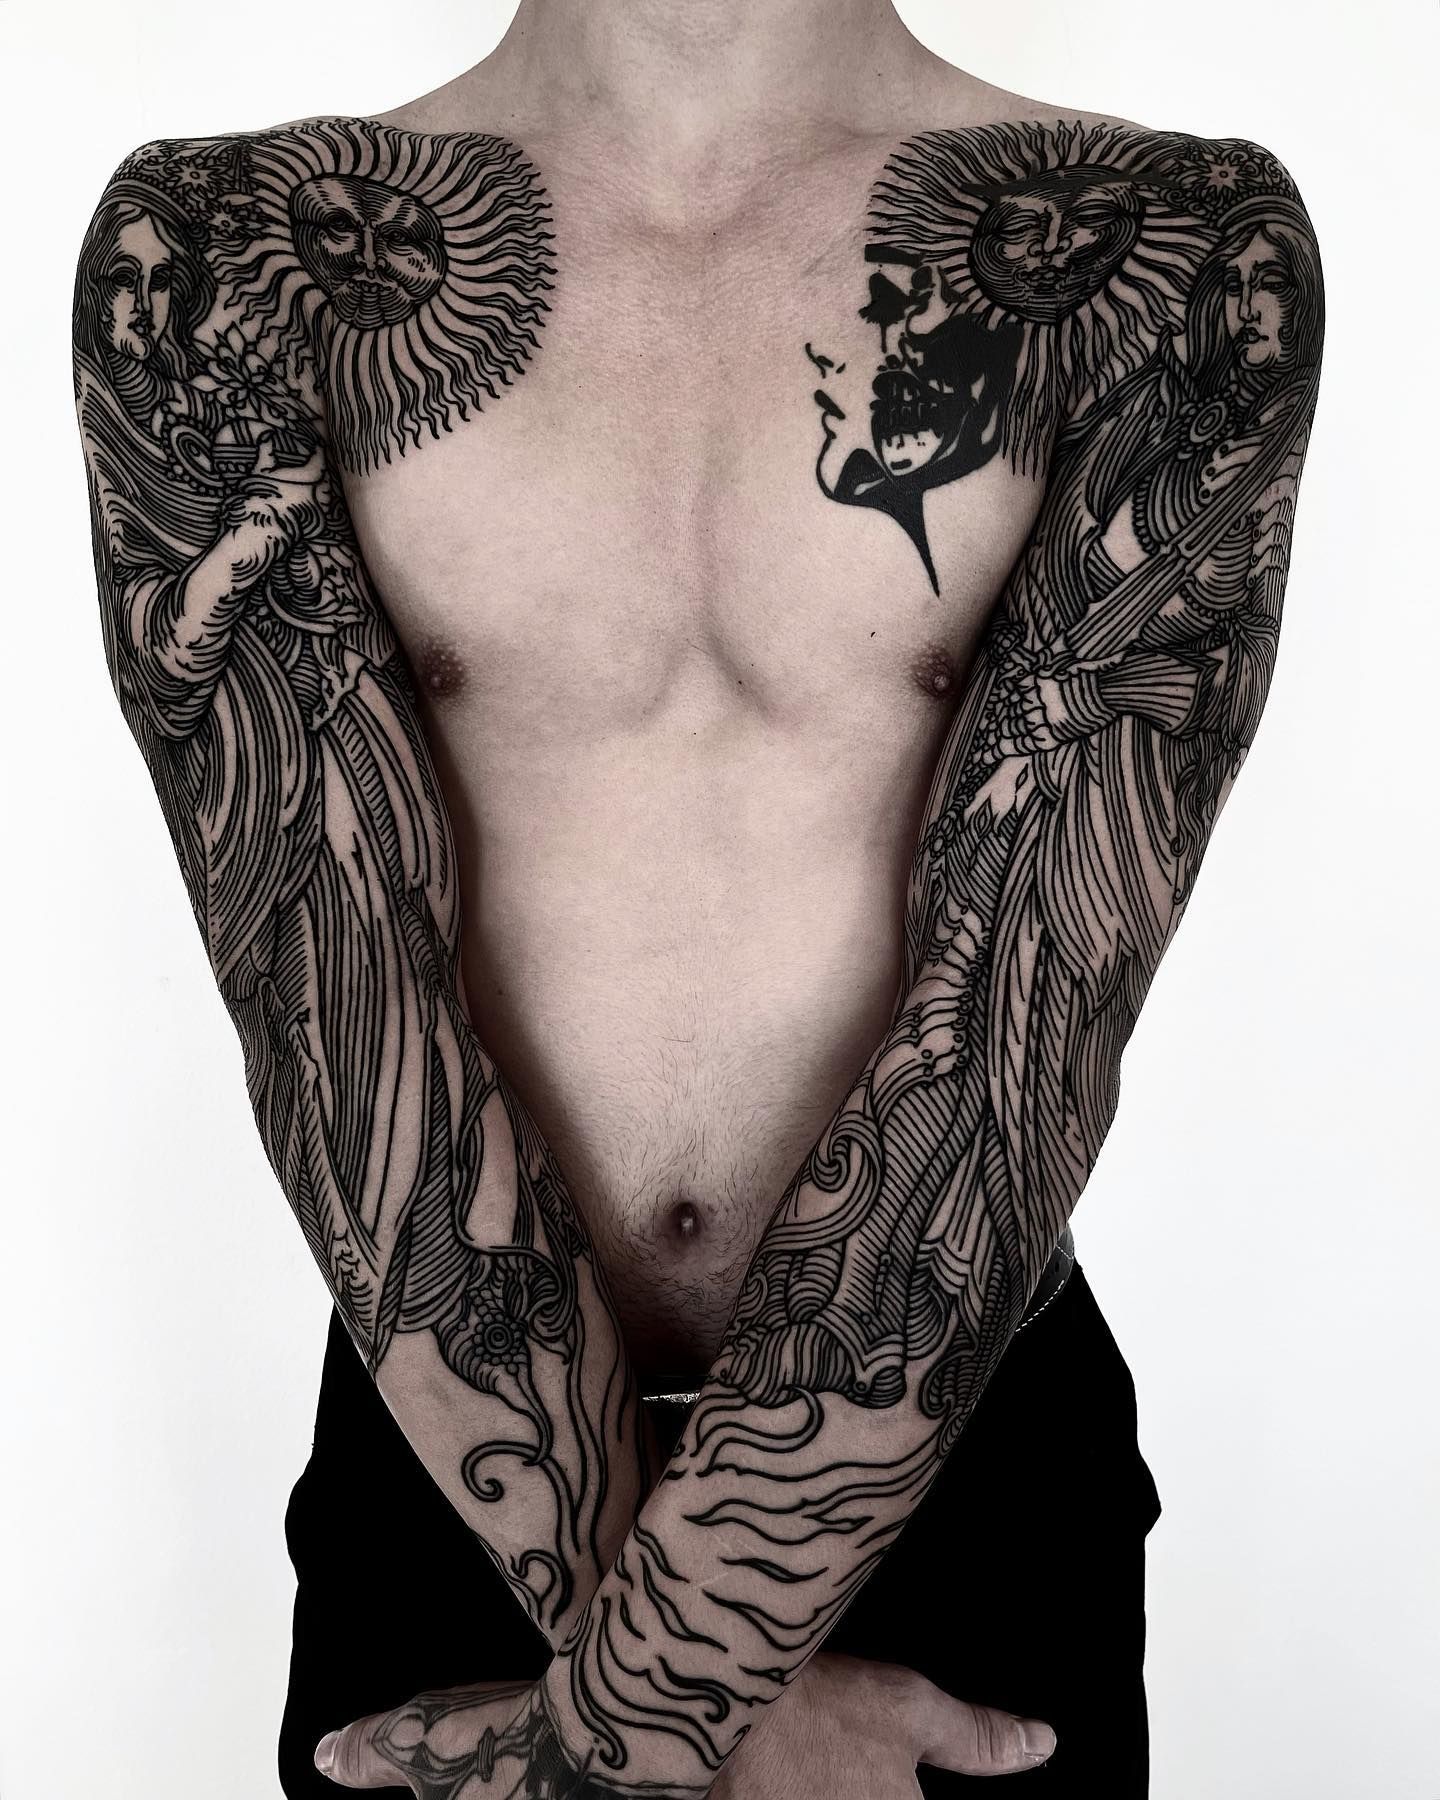 Sirius Black tattoo | Fandom